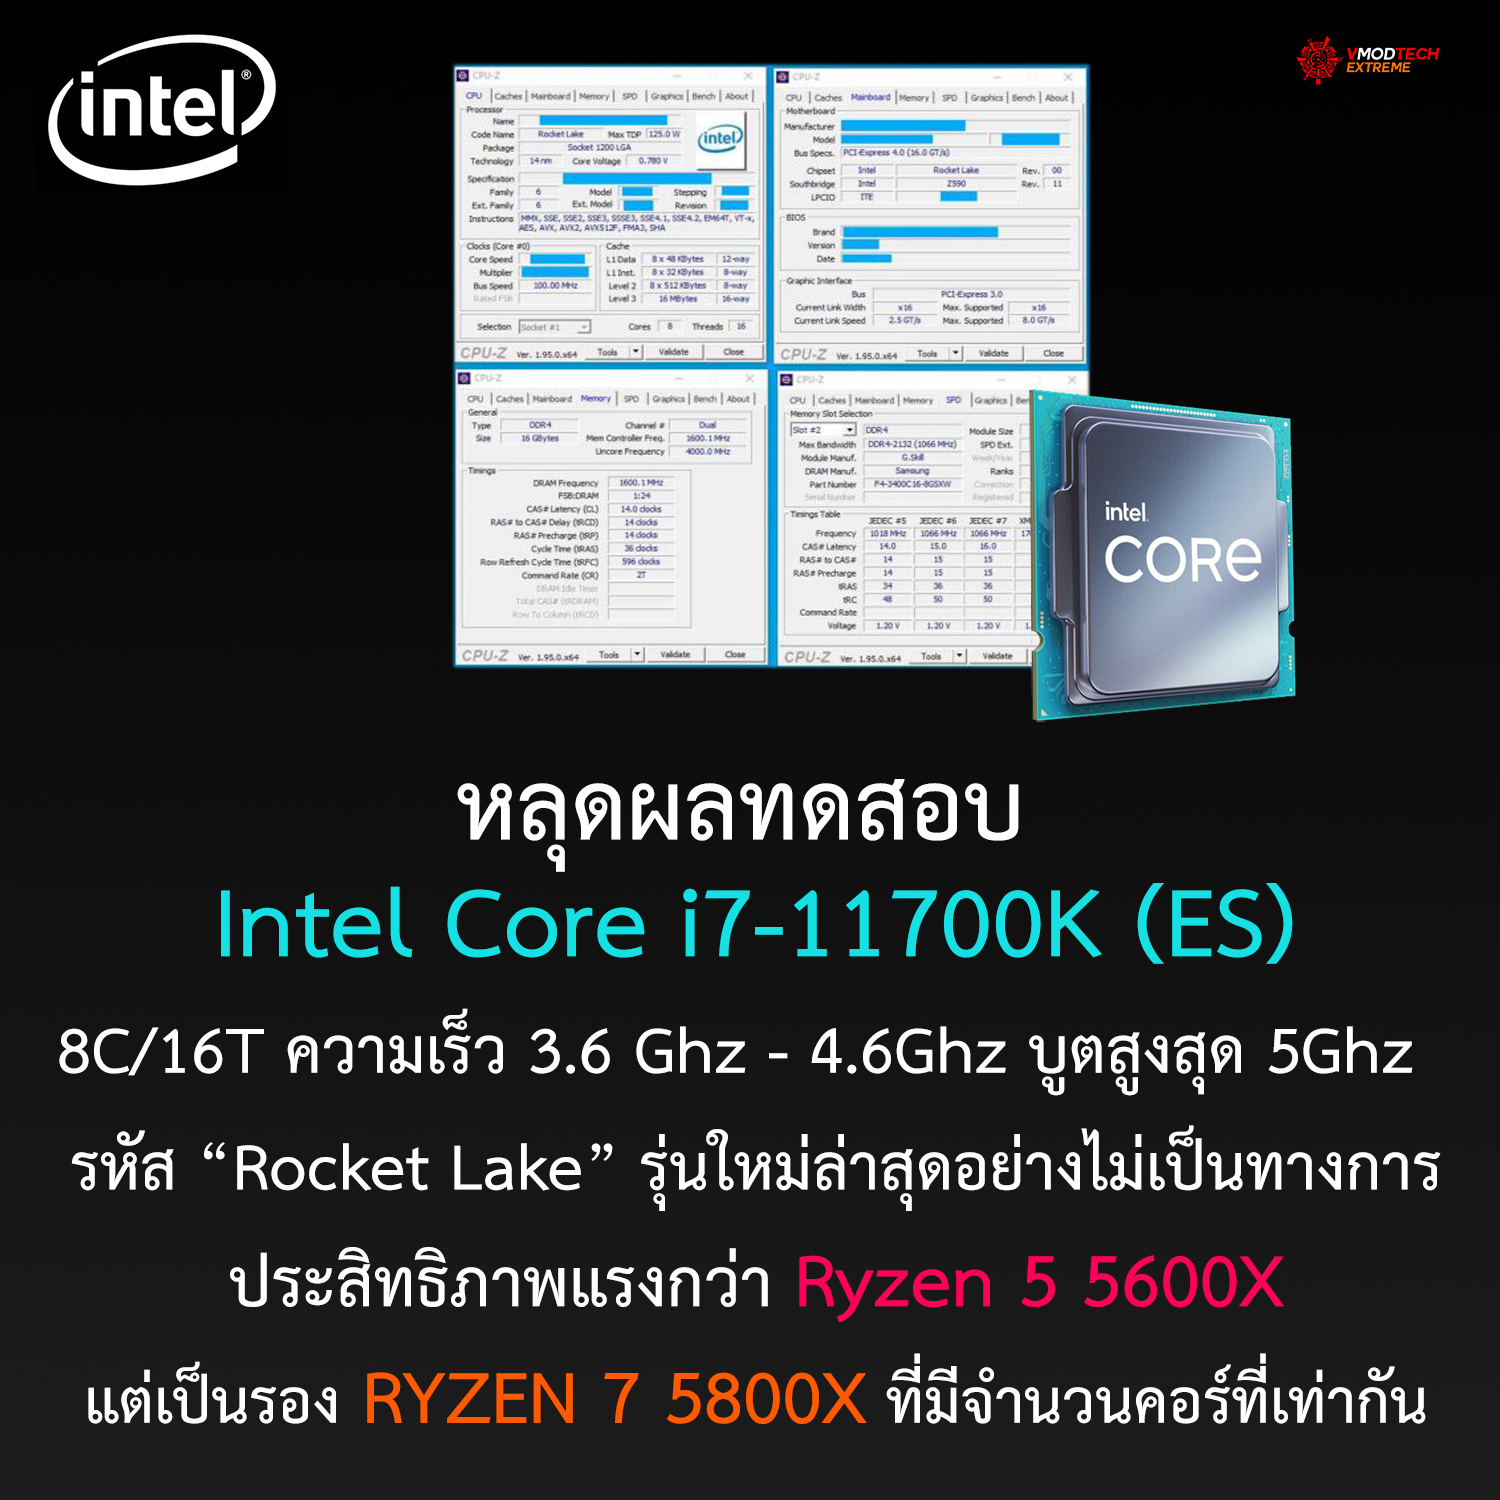 intel core i7 11700k rocket lake benchmark หลุดผลทดสอบ Intel Core i7 11700K ในรหัส Rocket Lake รุ่นใหม่ล่าสุดอย่างไม่เป็นทางการ 